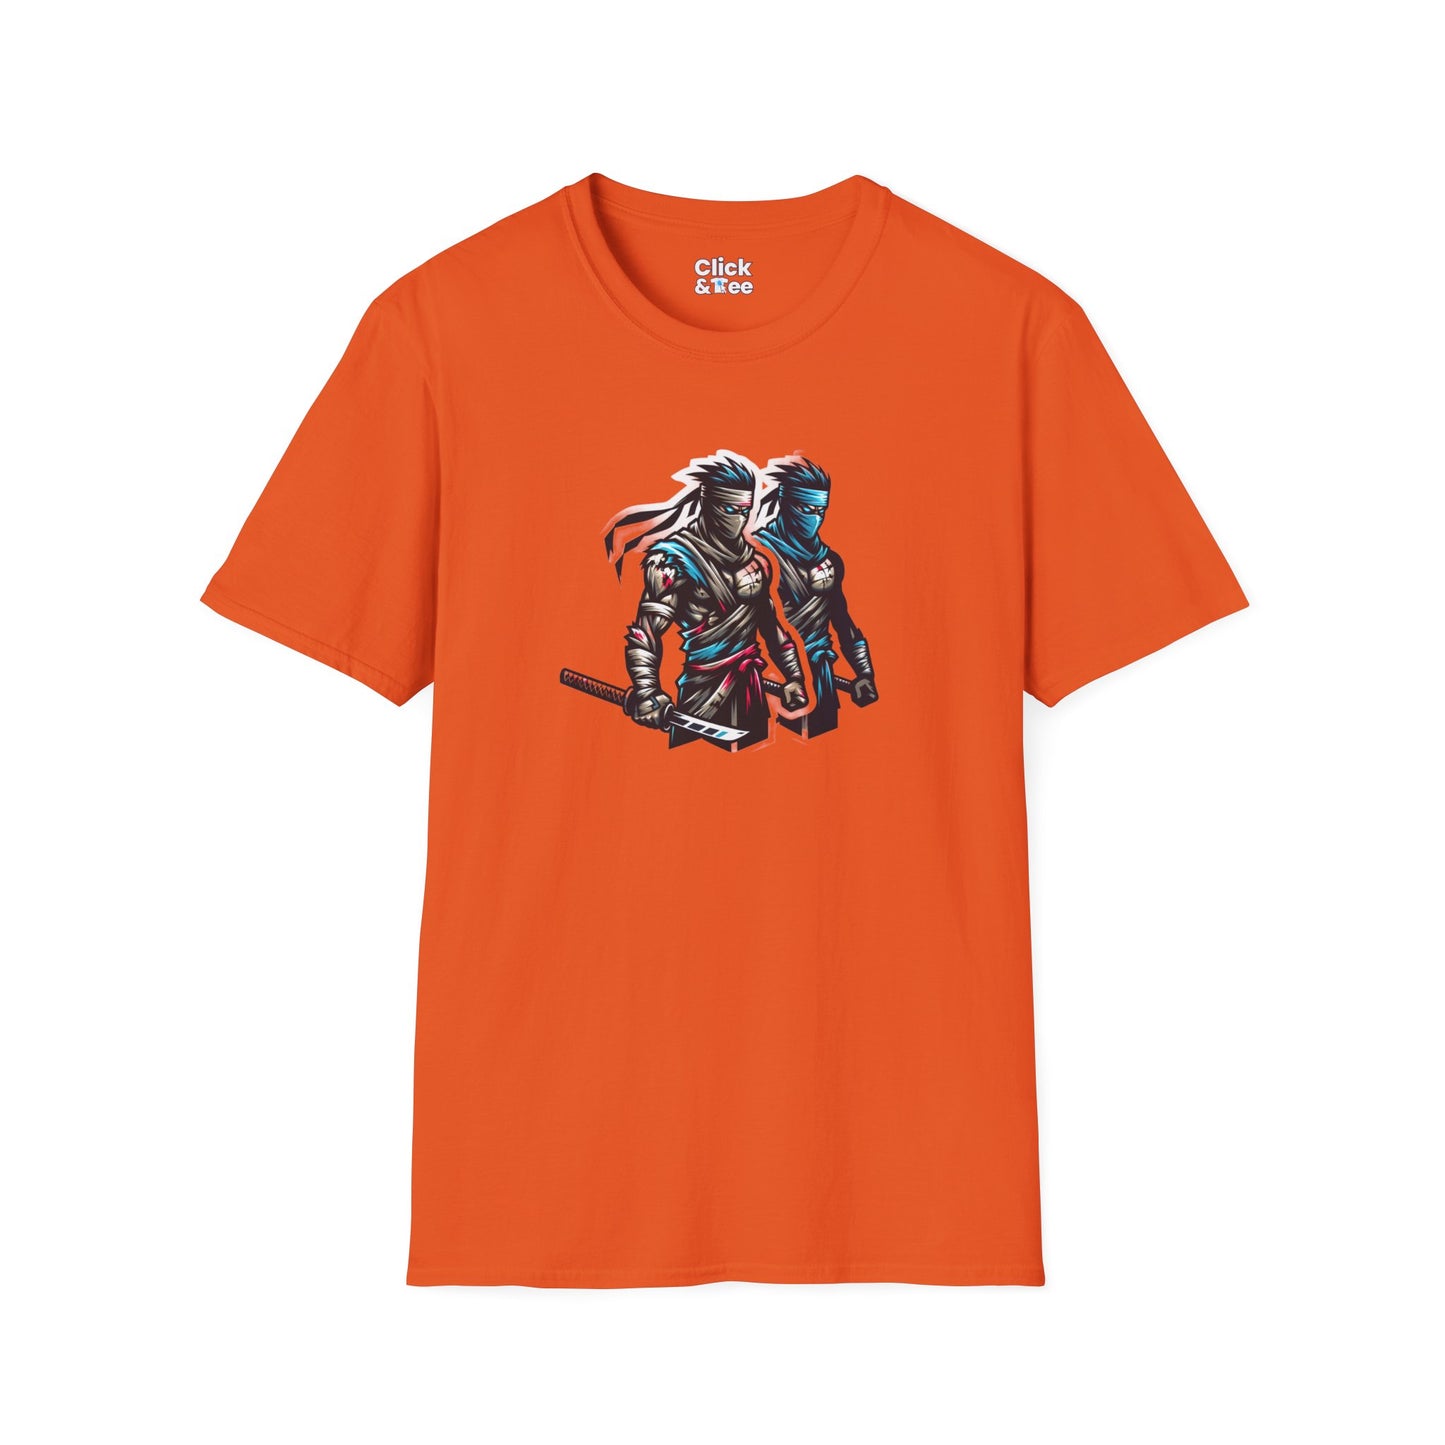 Realistic T-Shirt - Battle-scarred Warrior Ninja Ready for battle - Realistic Style T-Shirt